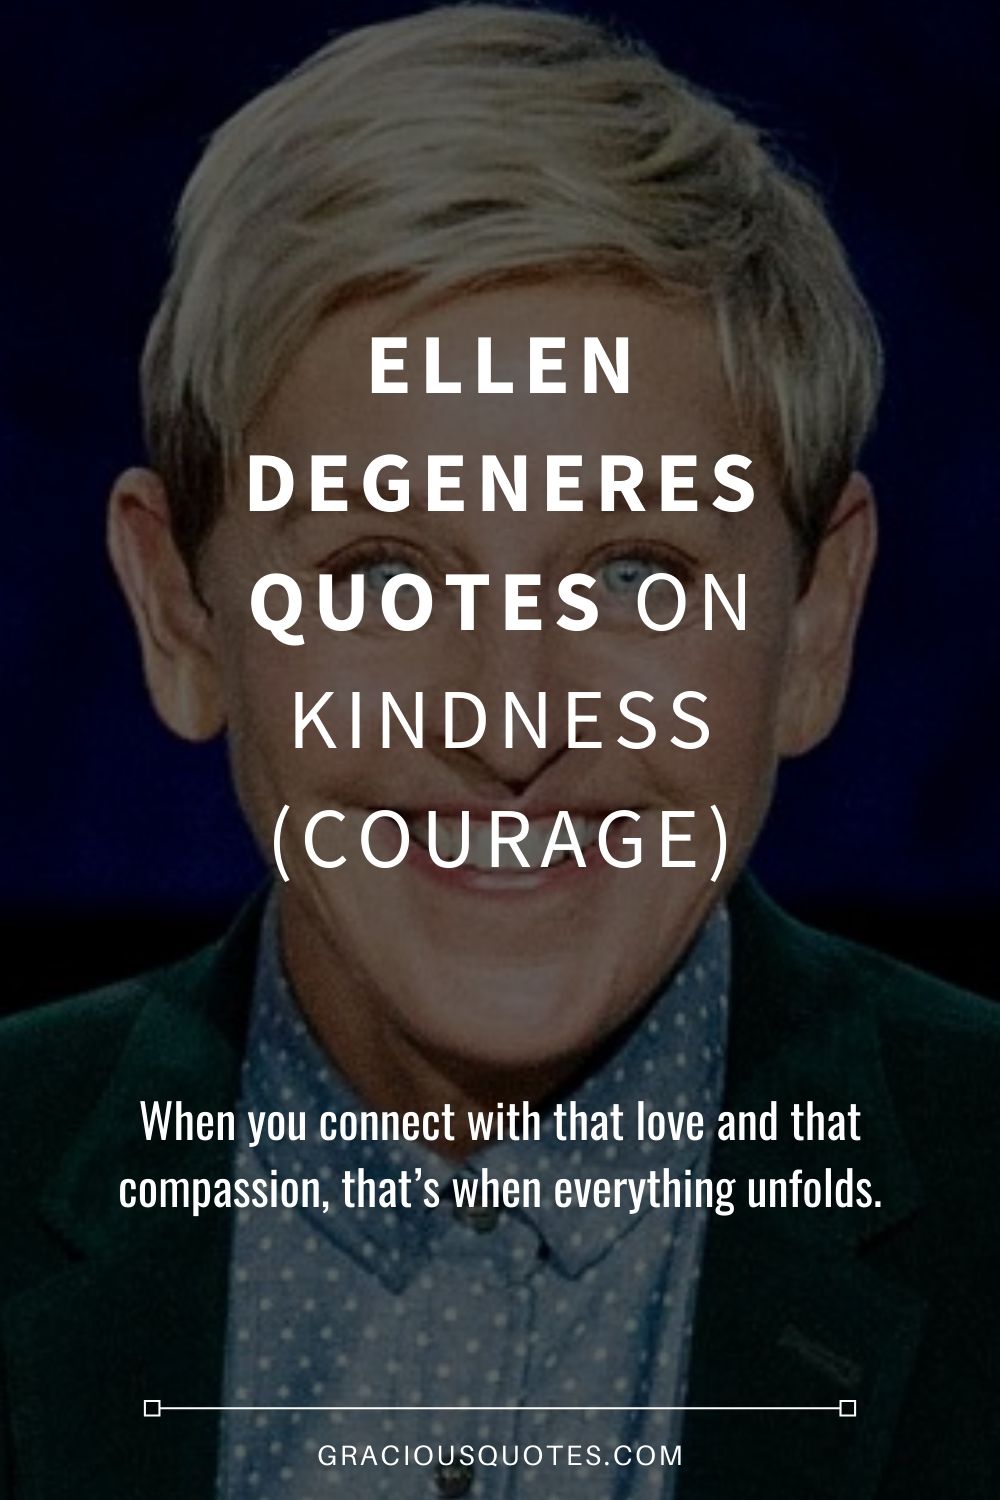 Ellen DeGeneres Quotes on Kindness (COURAGE) - Gracious Quotes